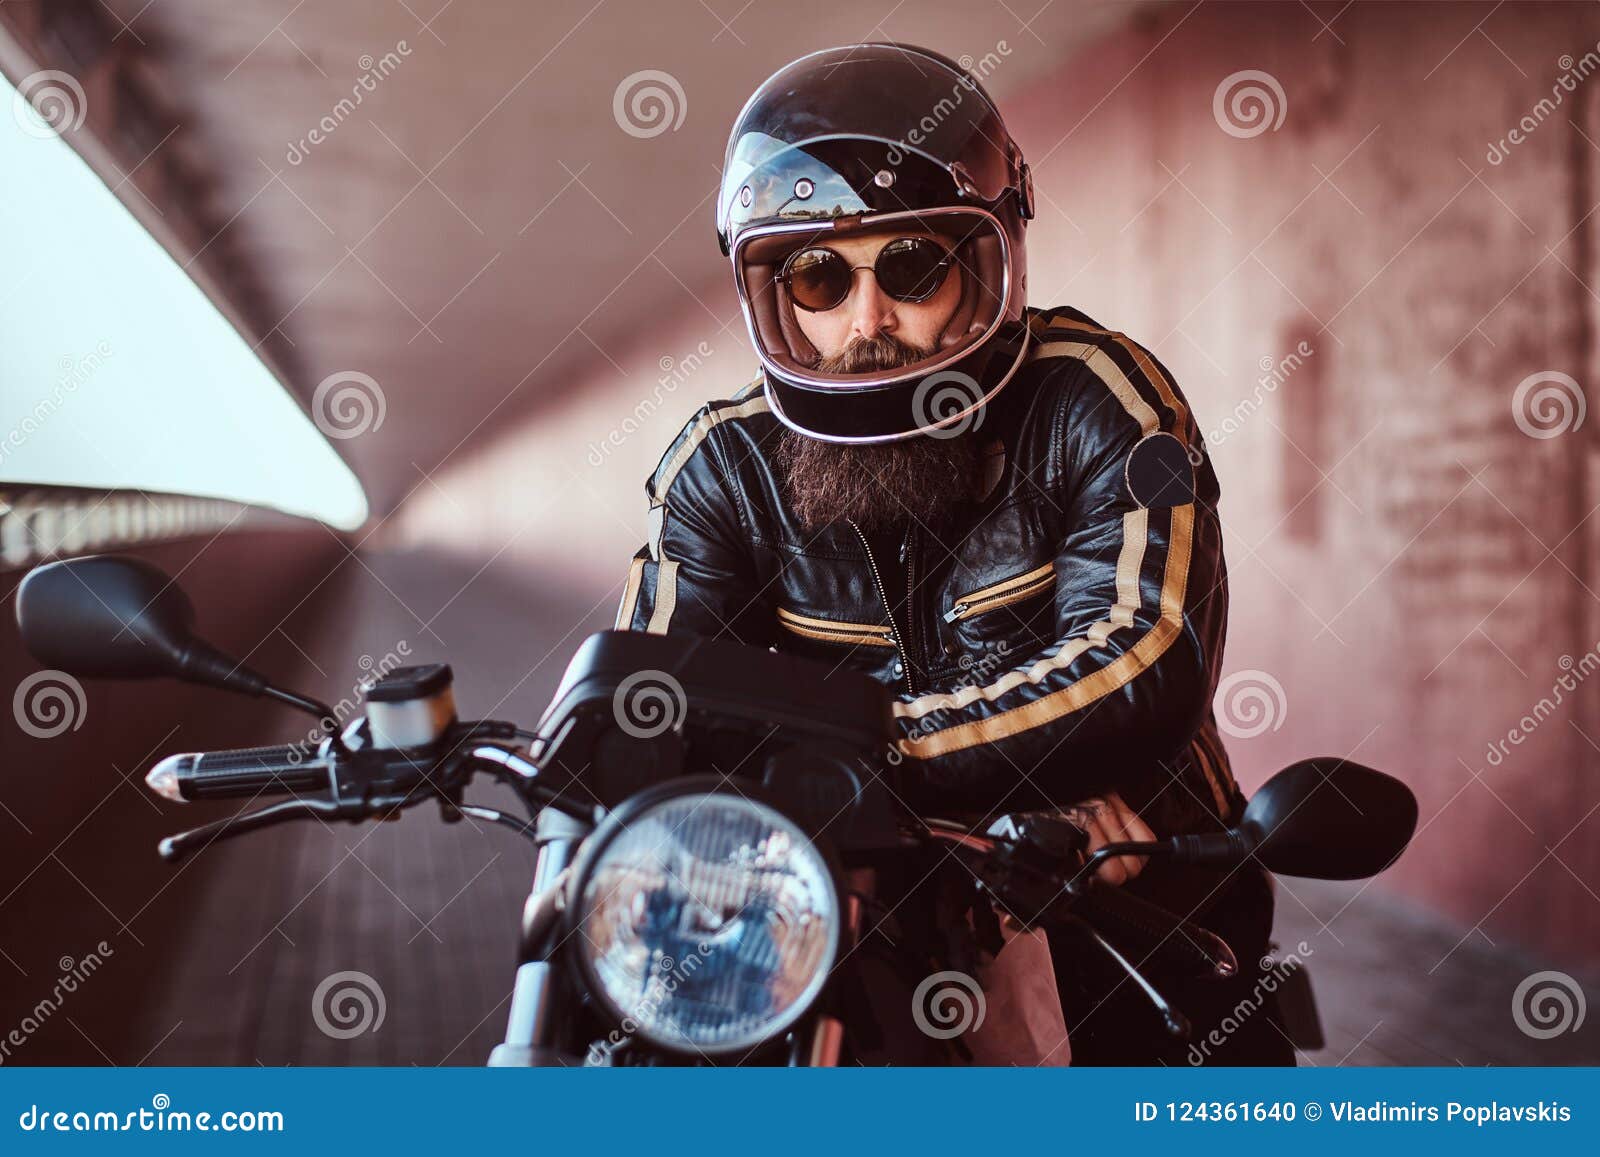 biker armour sunglasses